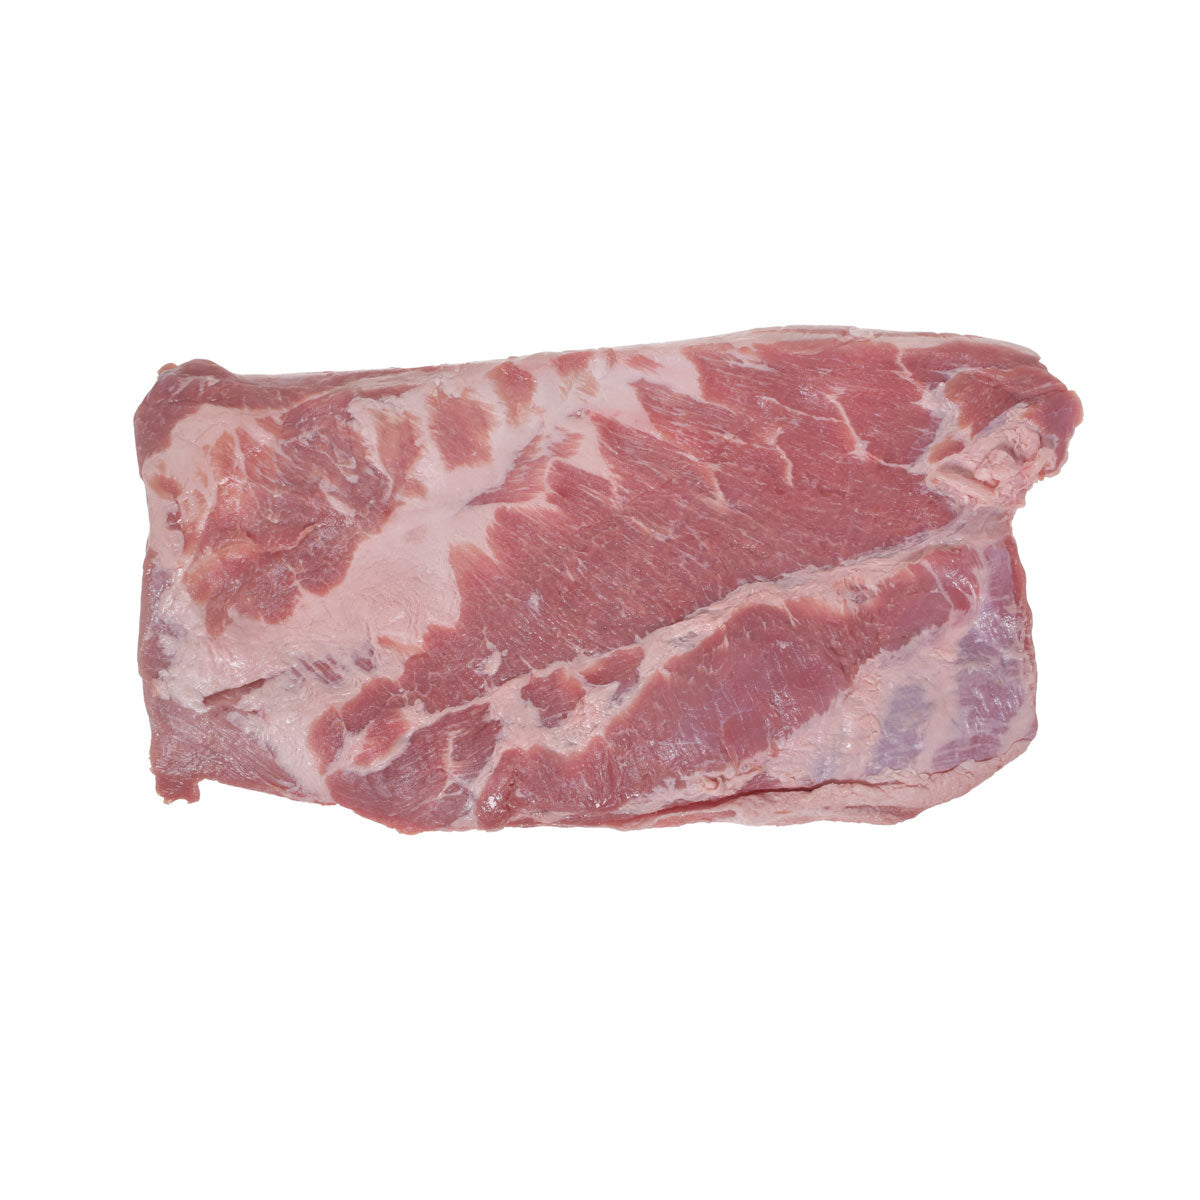 Niman Ranch Skinless Heritage Pork Belly